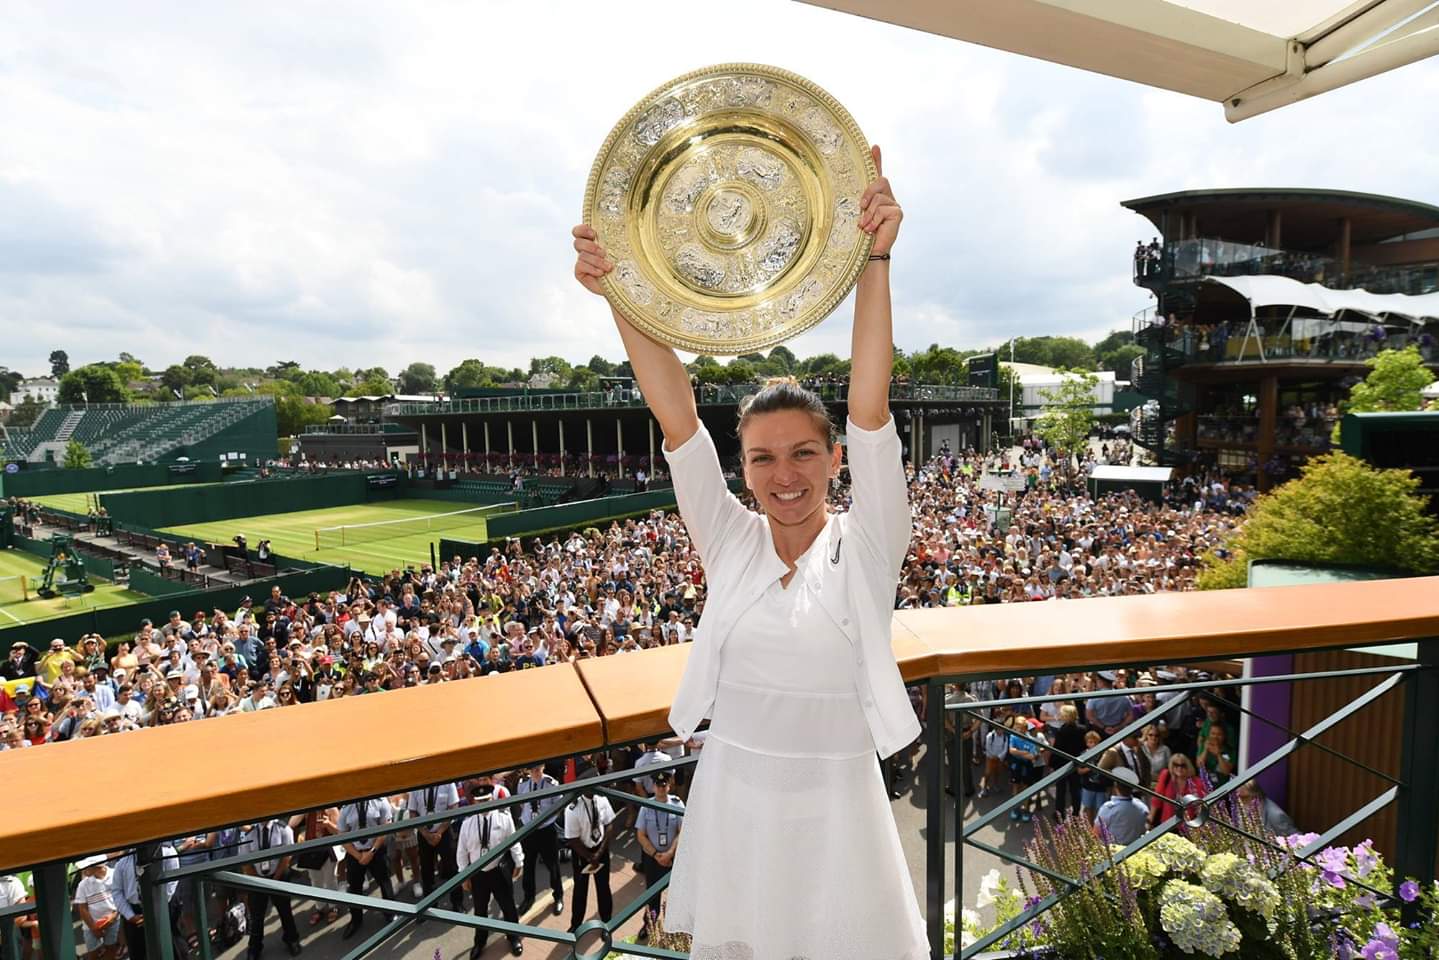  2019 Wimbledon Champion
Happy Birthday 